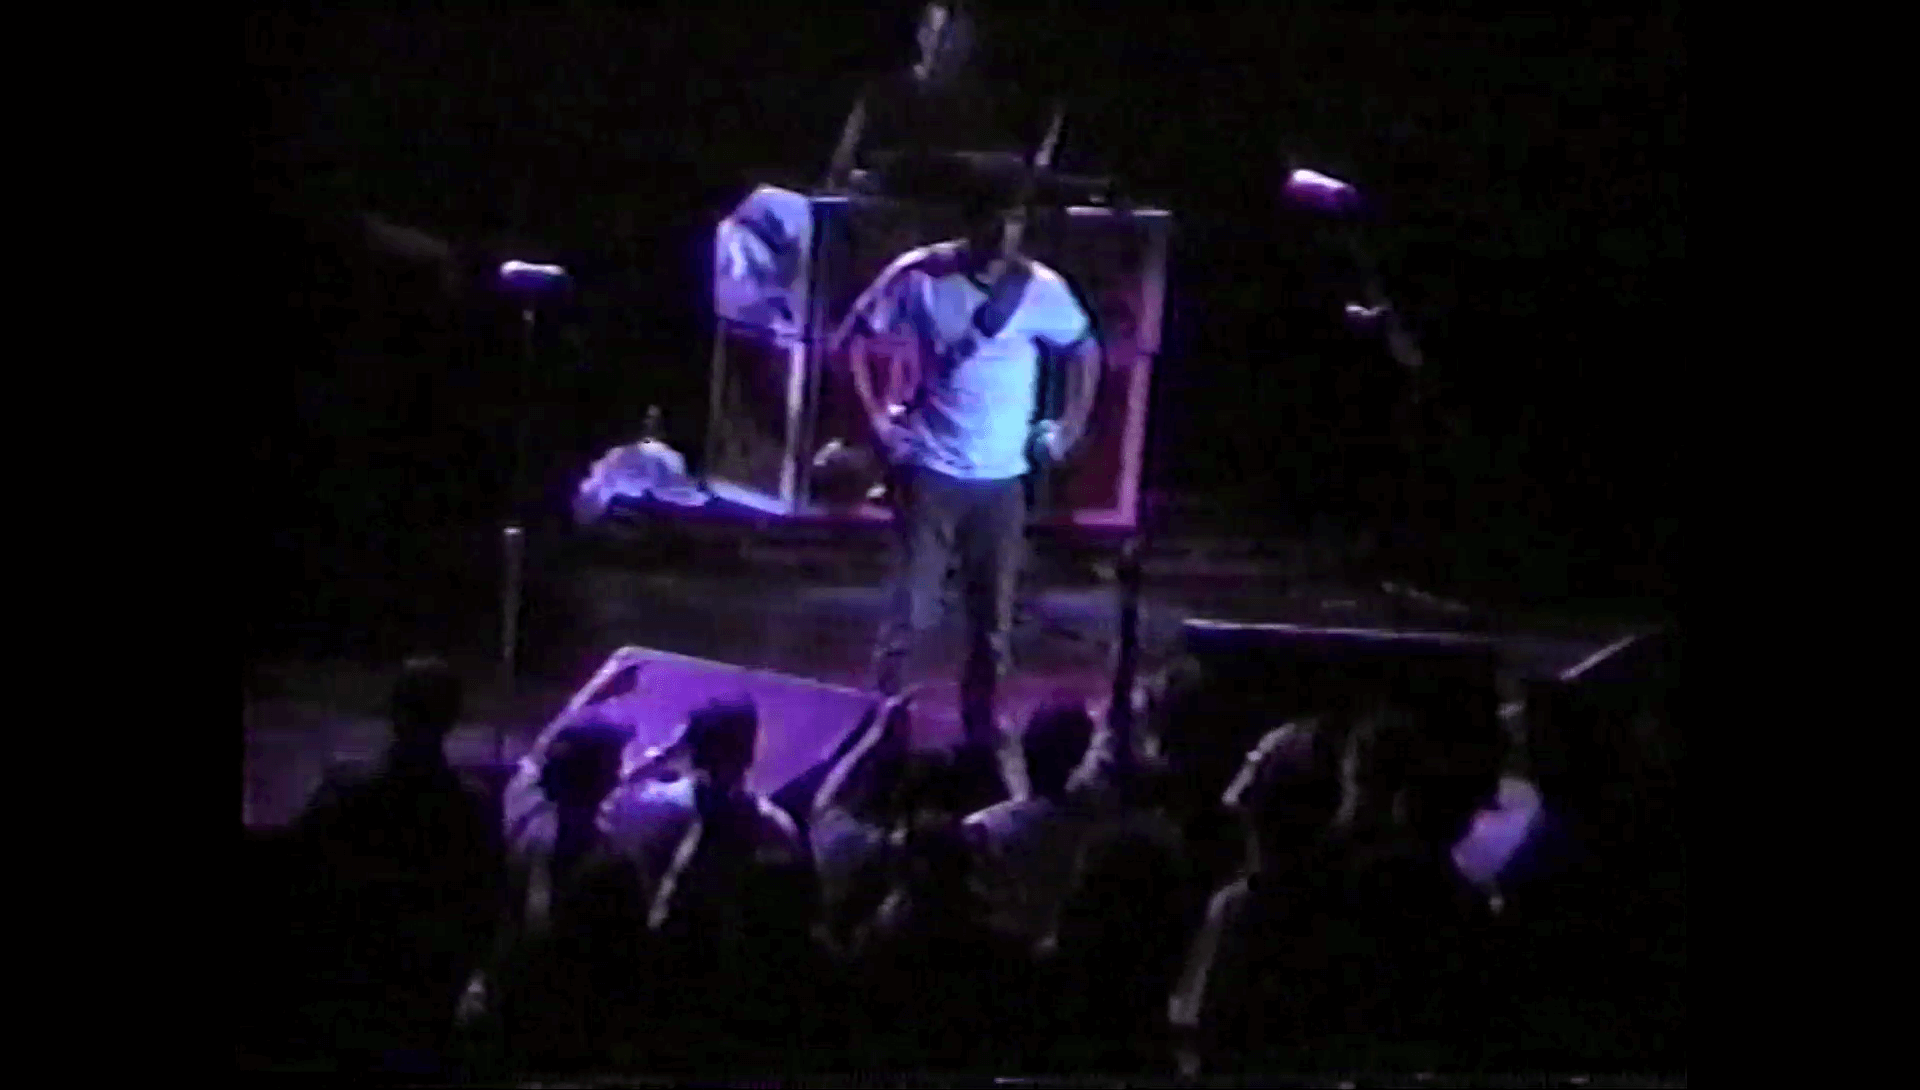 Oasis at Radio City Music Hall, New York, USA - June 8, 2001